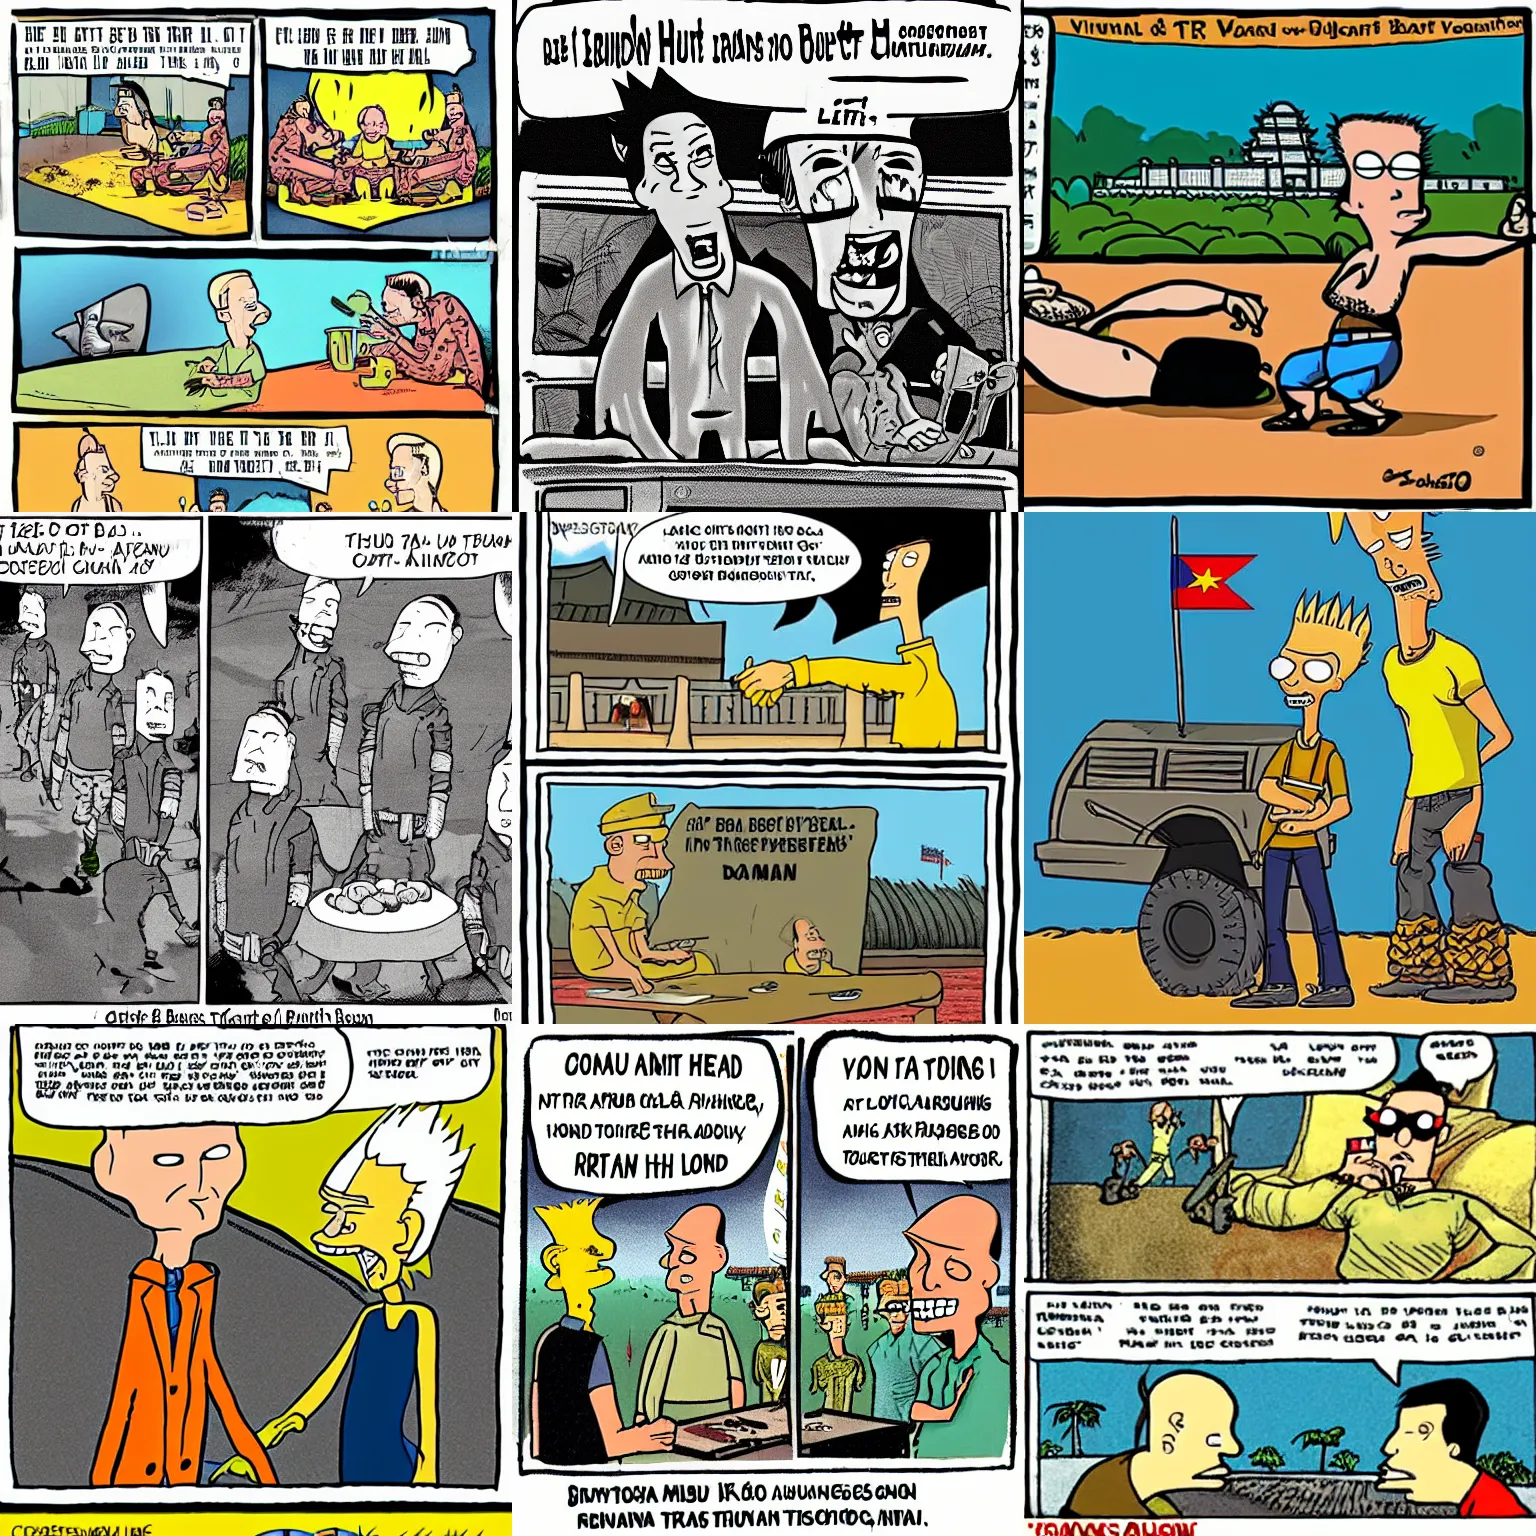 Prompt: beavis and butt - head visit vietnam. cartoon.